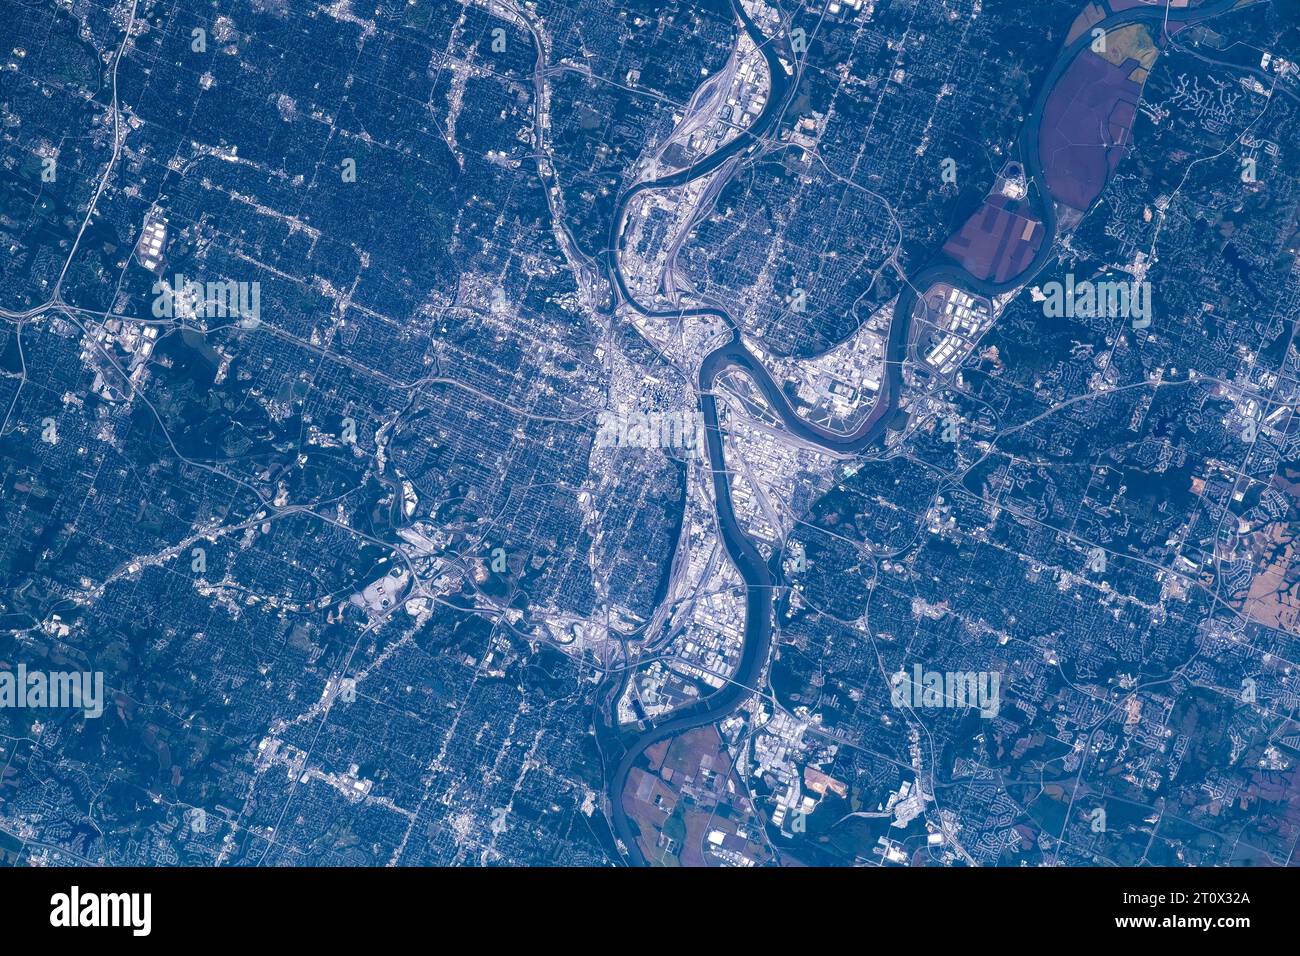 Kansas City, USA. Digital enhancement of a NASA image. Media usage guidelines: https://www.nasa.gov/nasa-brand-center/images-and-media/ Stock Photo